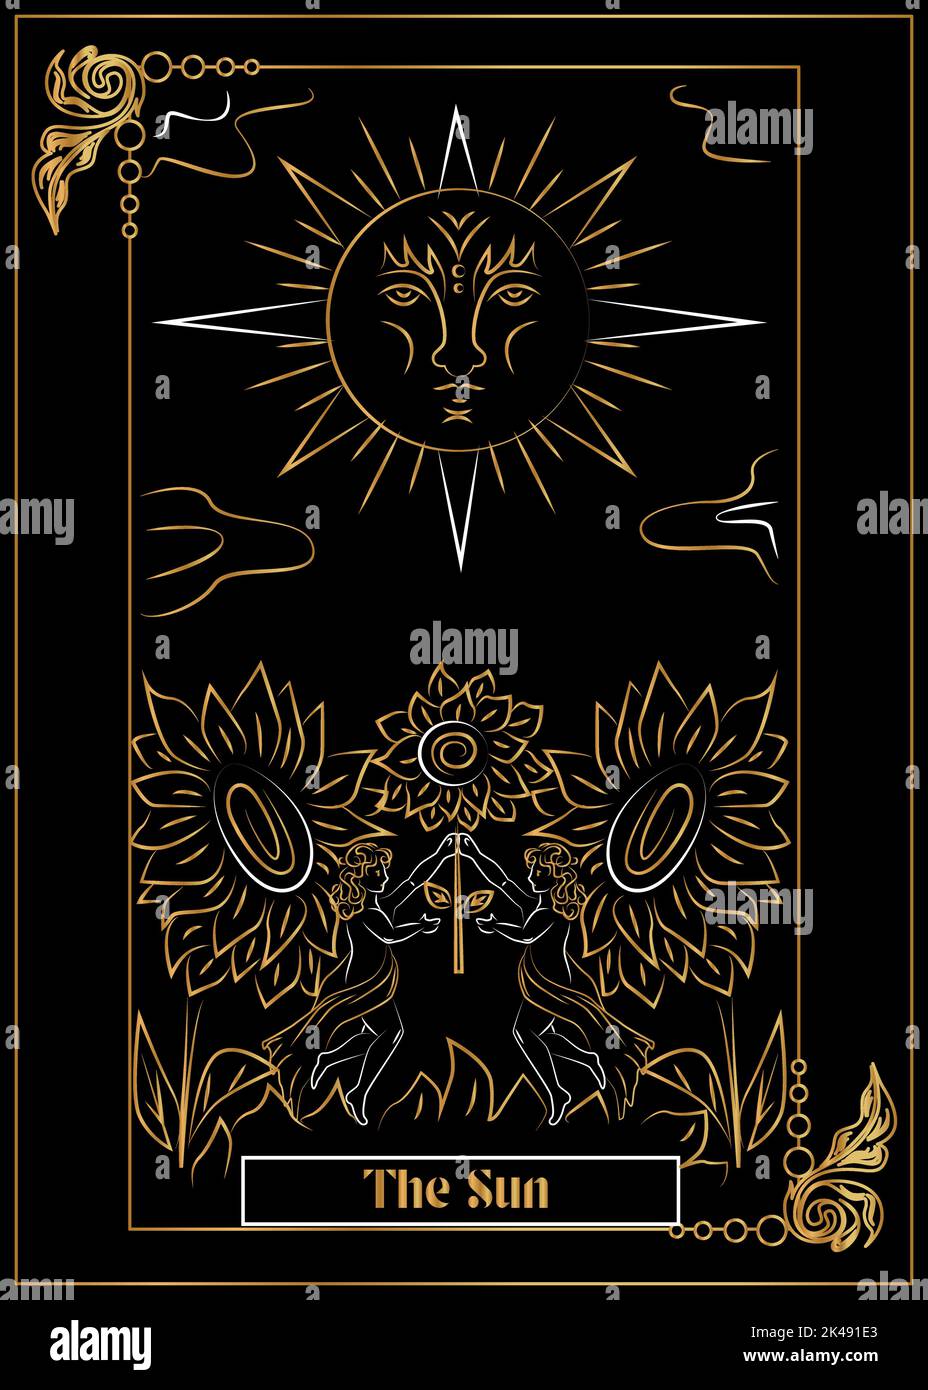 the illustration - card for tarot - The Sun. Stock Vector